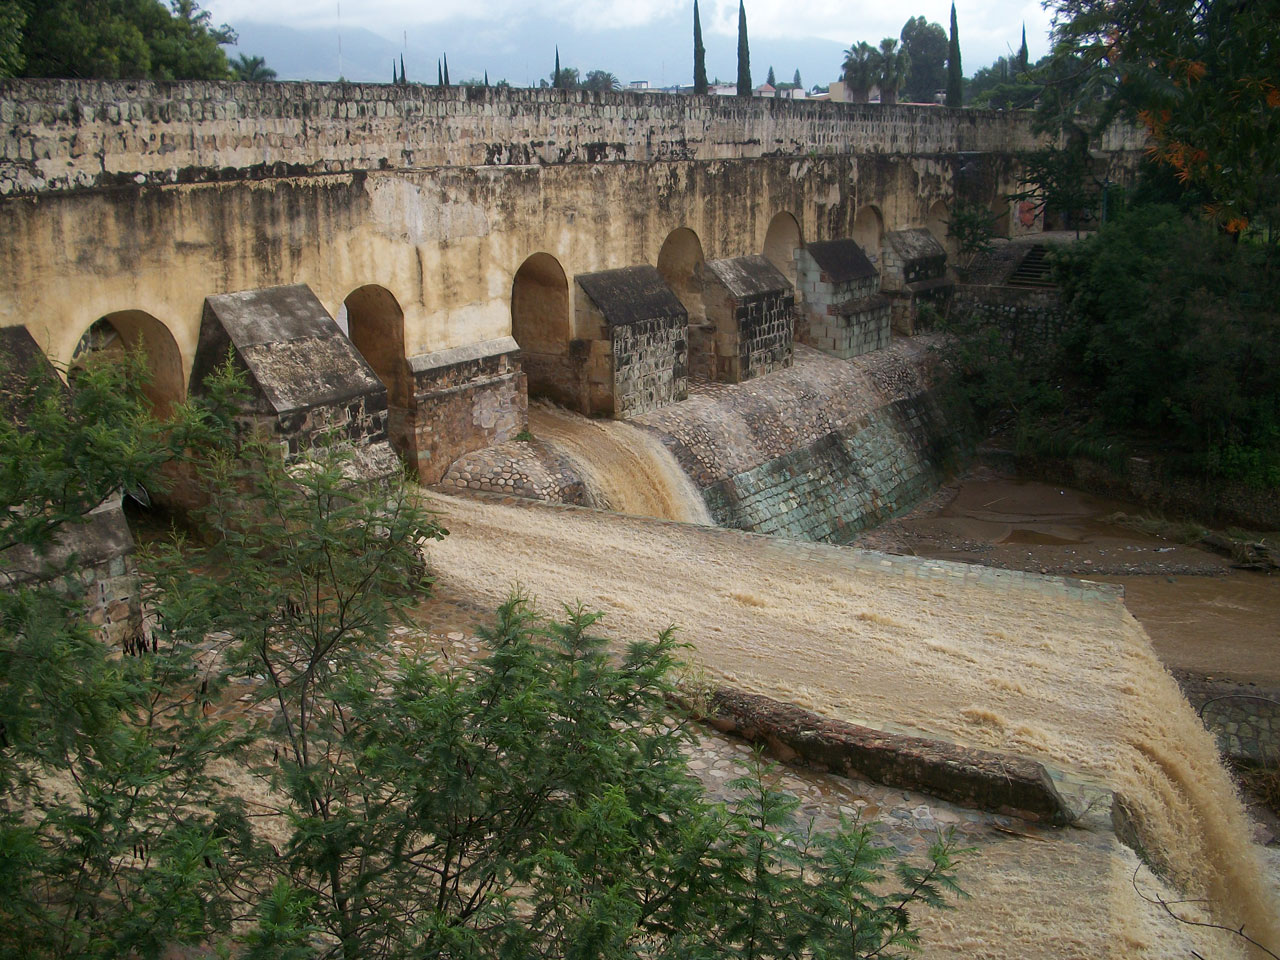 Aqueduct of the Spanish period in Oaxaca